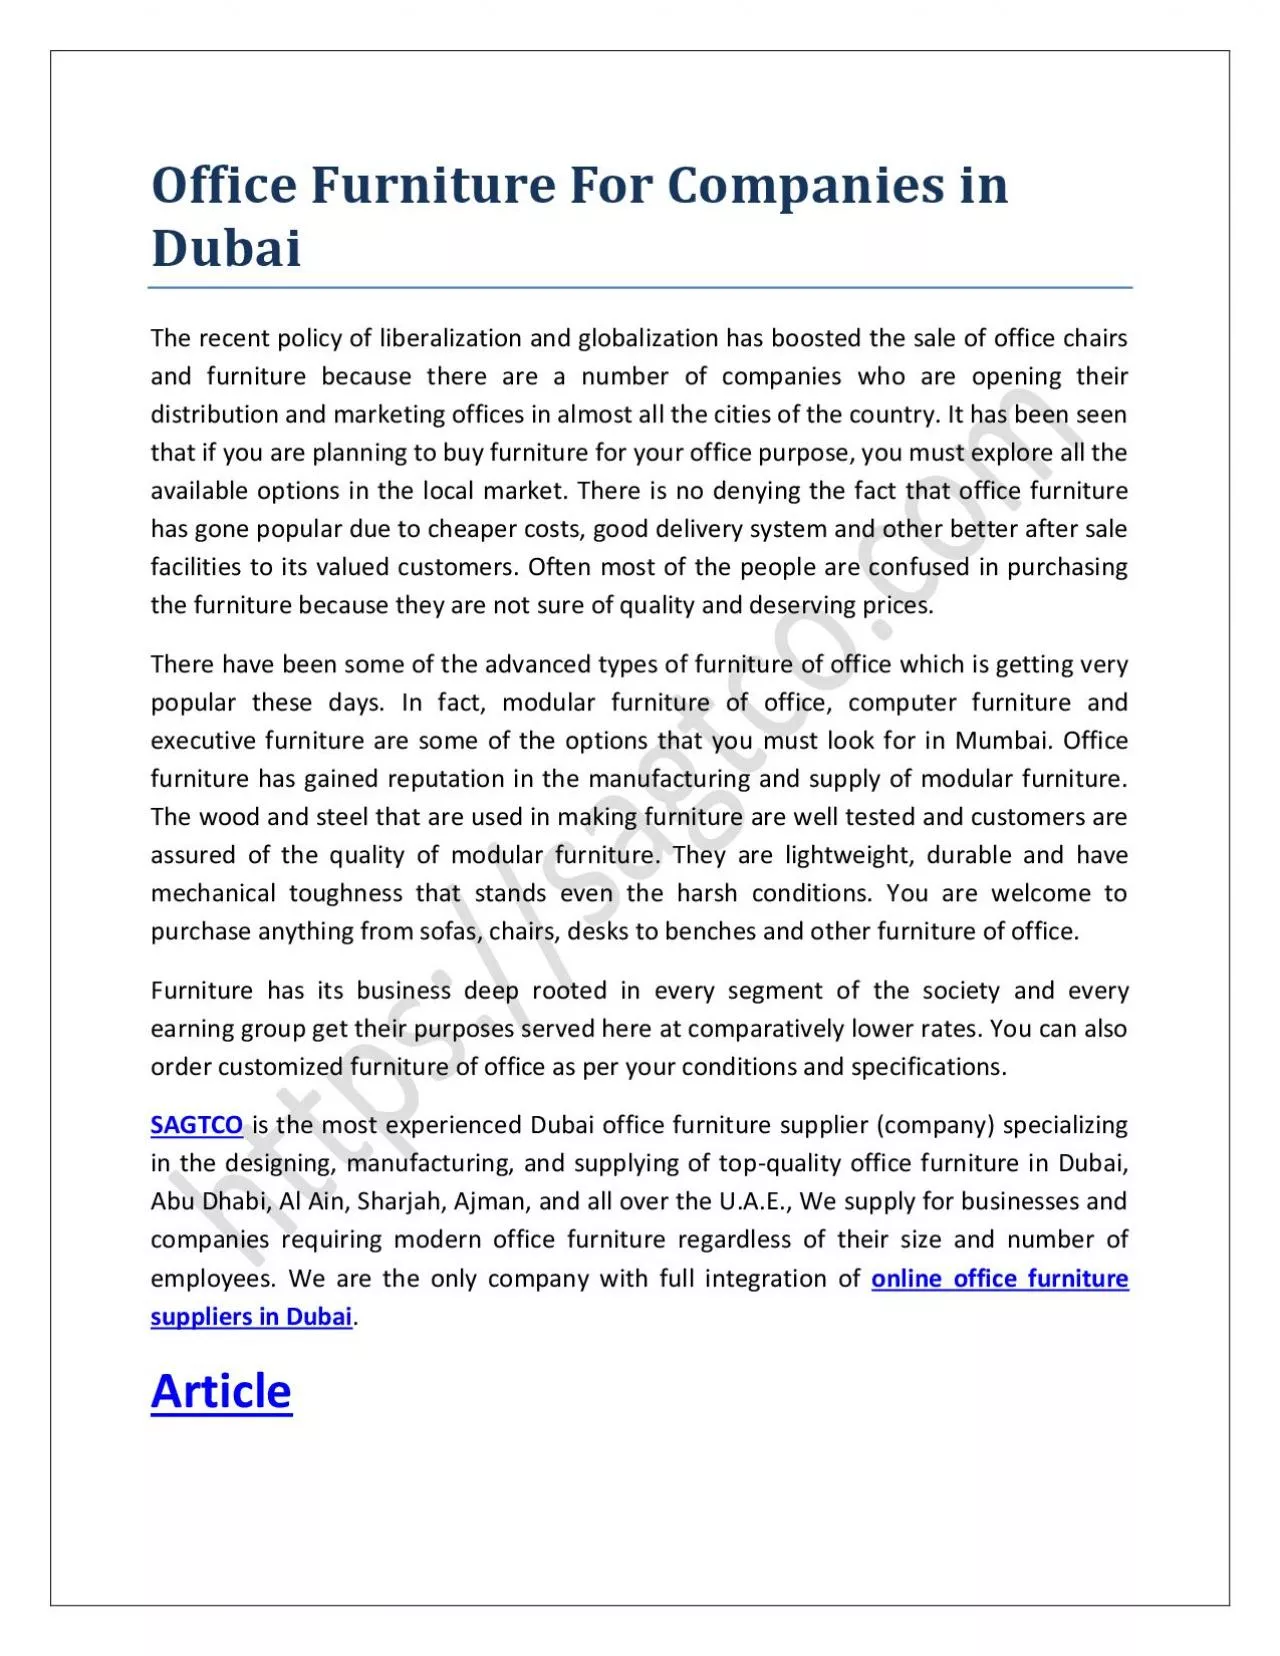 Office Furniture For Companies in Dubai